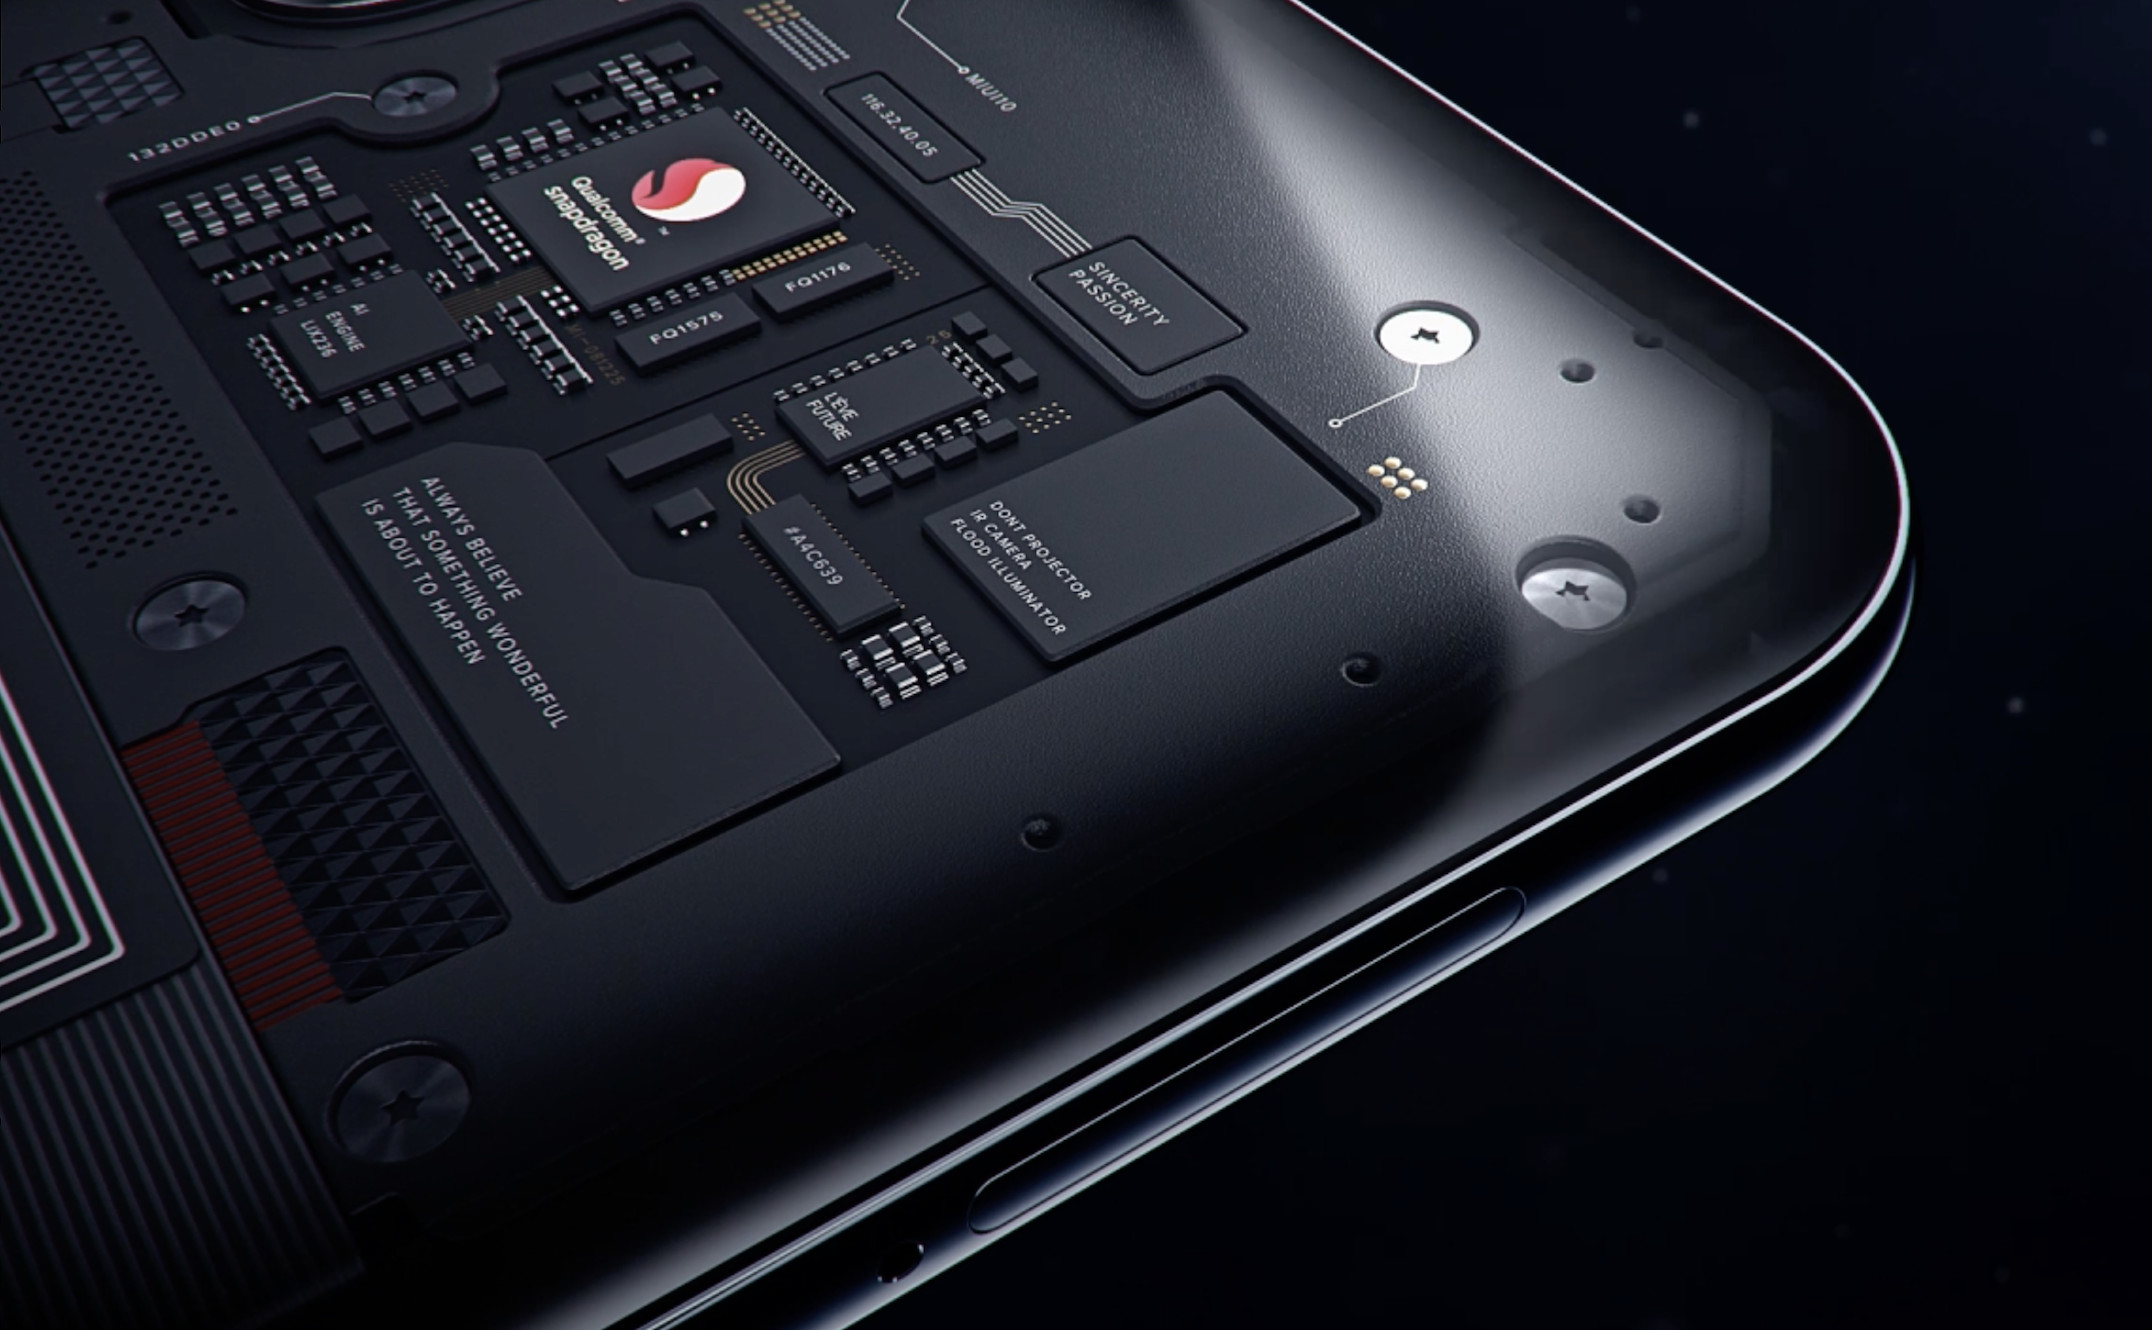 Xiaomi 9 Transparent Edition